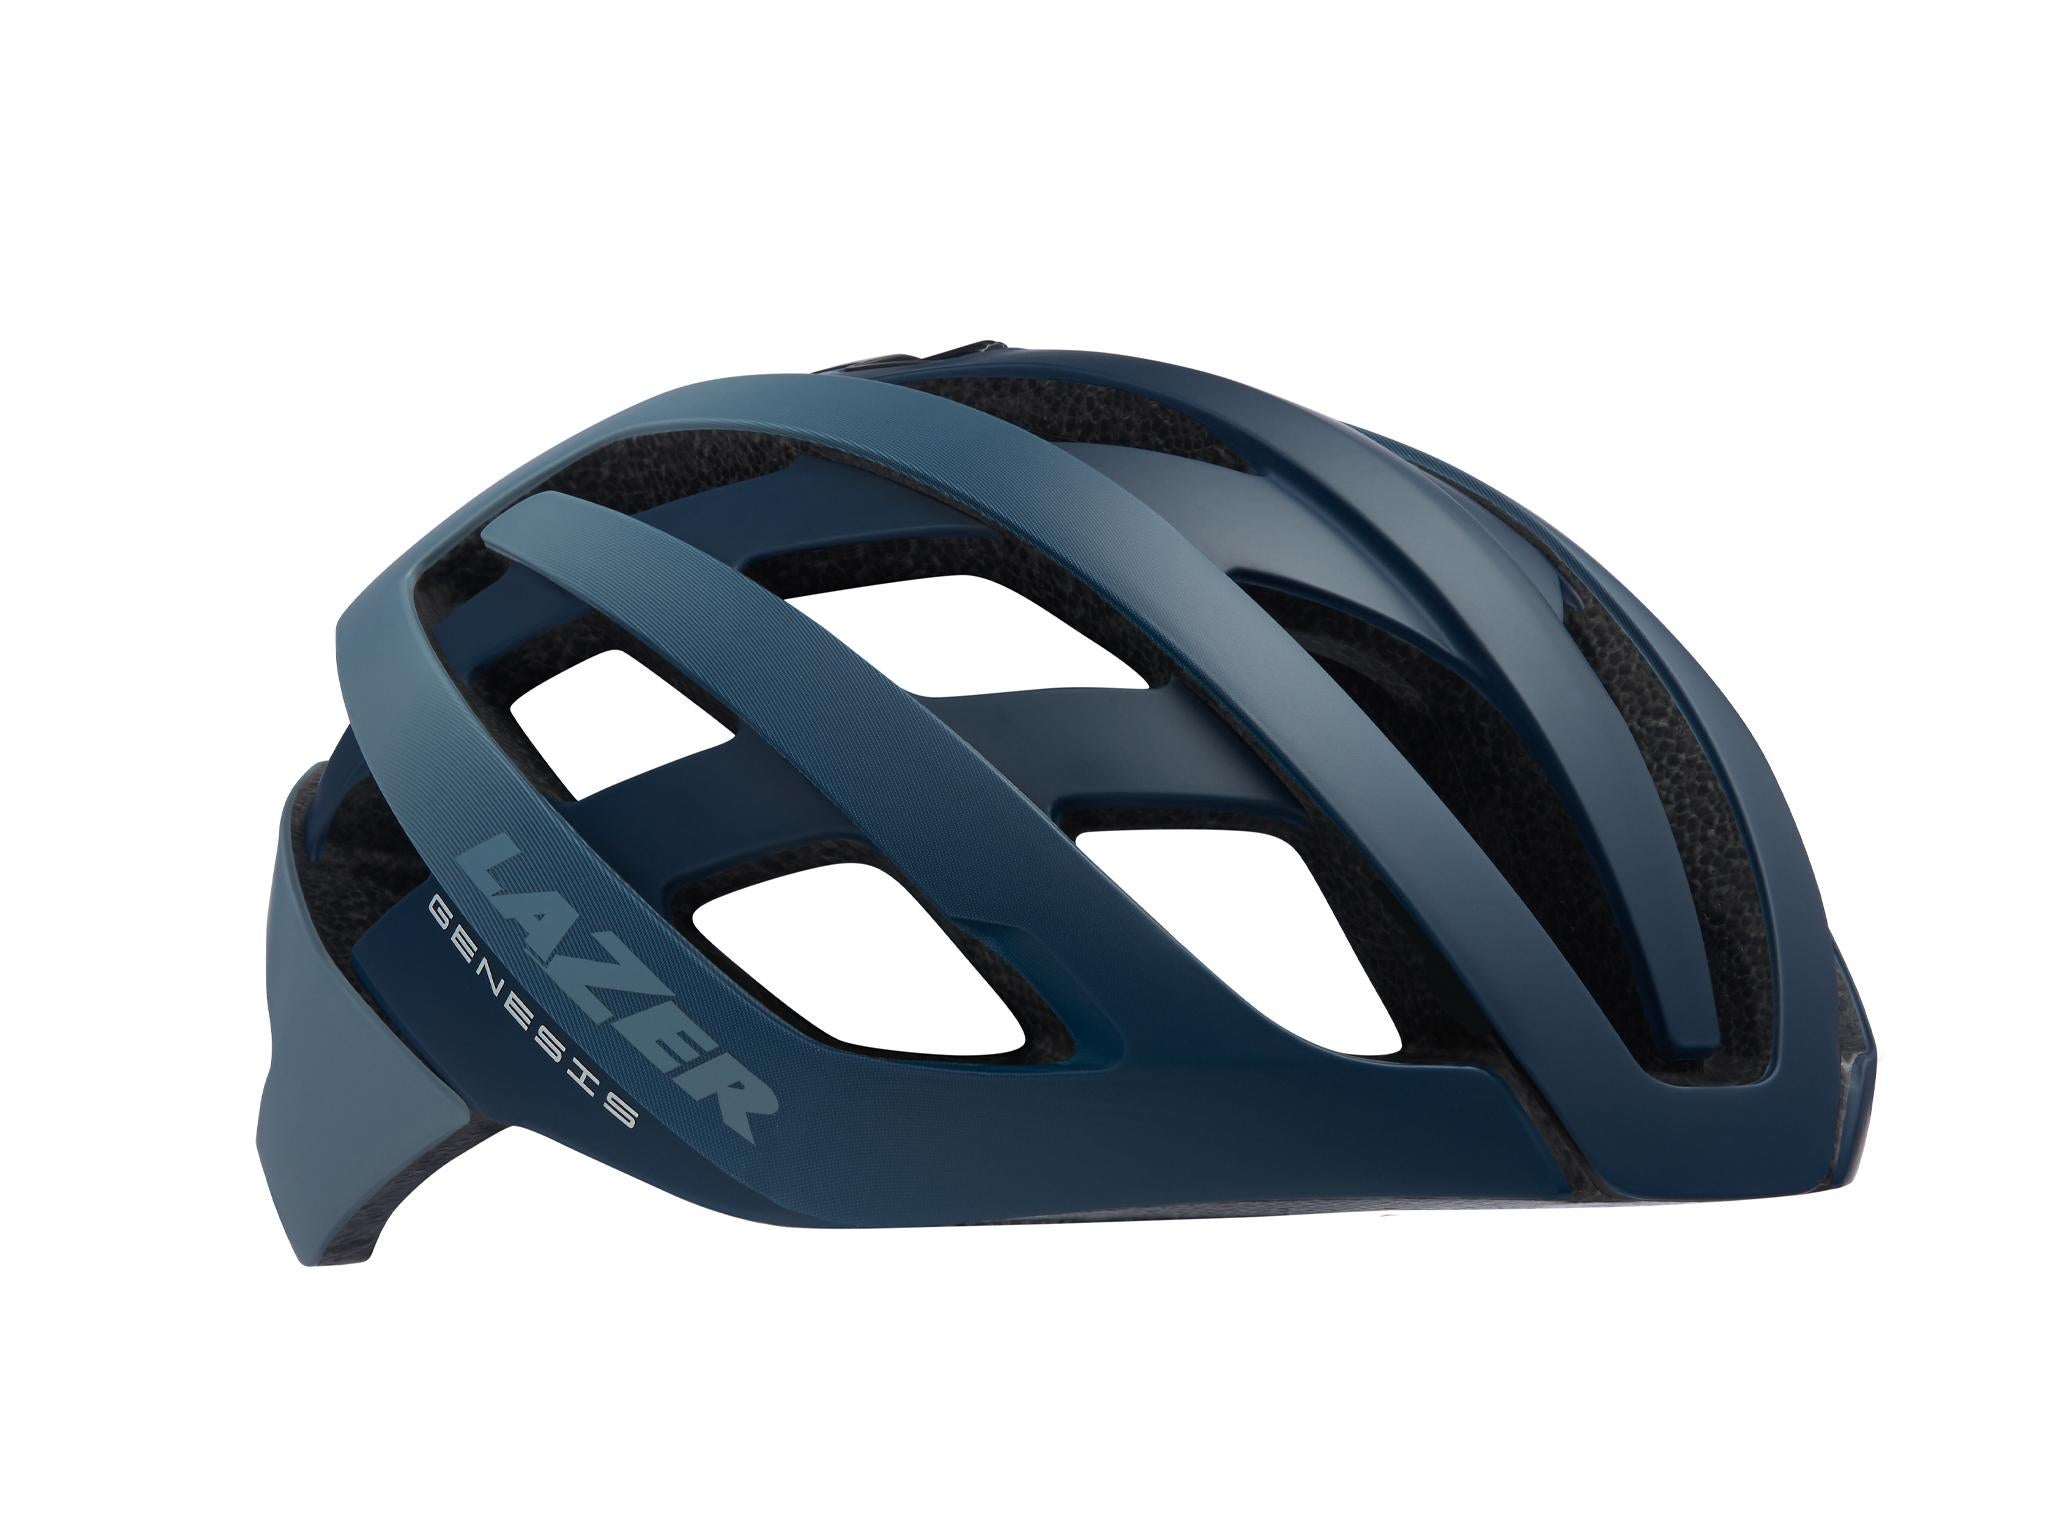 cycle helmet low price